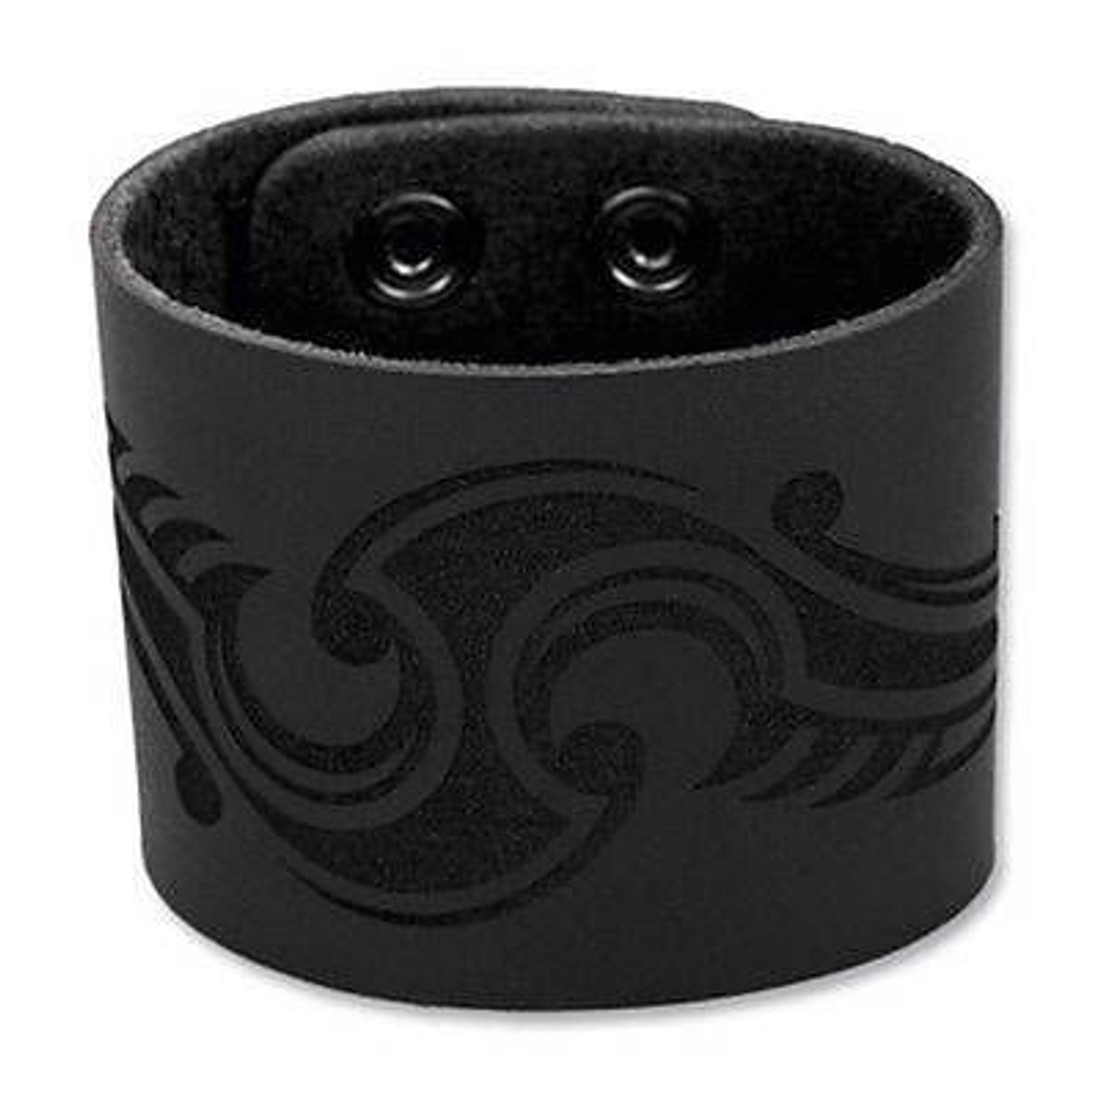 Bico black leather cuff bracelet.